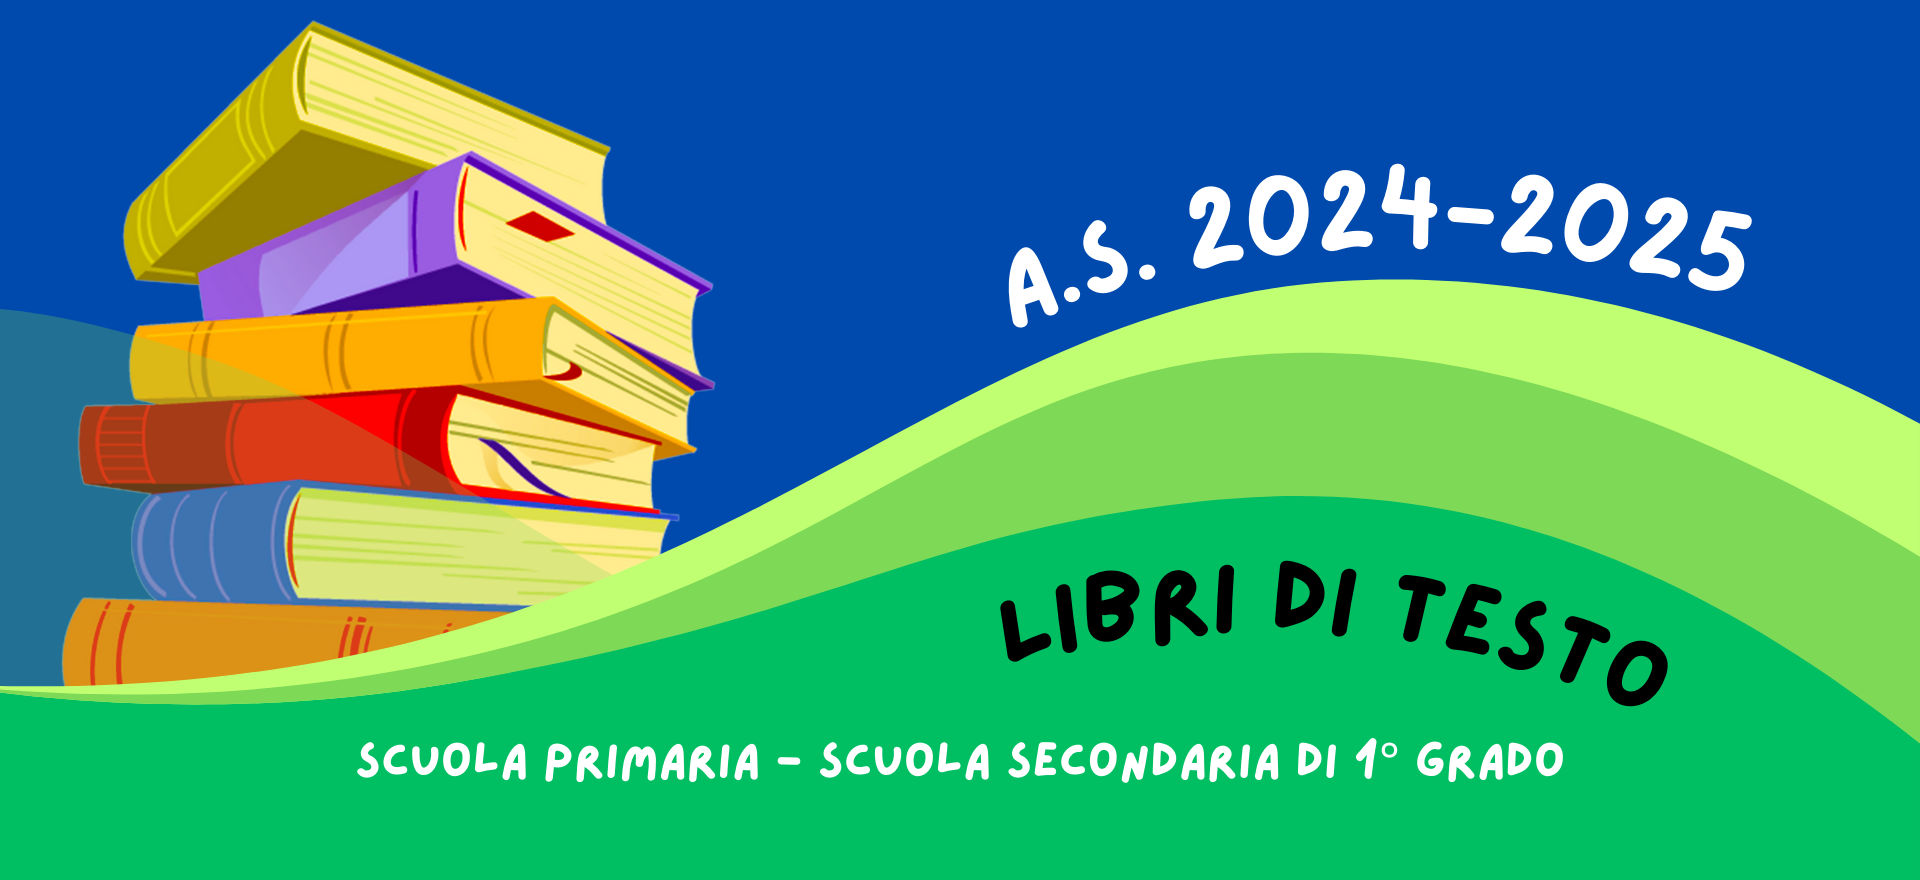 Libri-di-testo 2024-2025.png